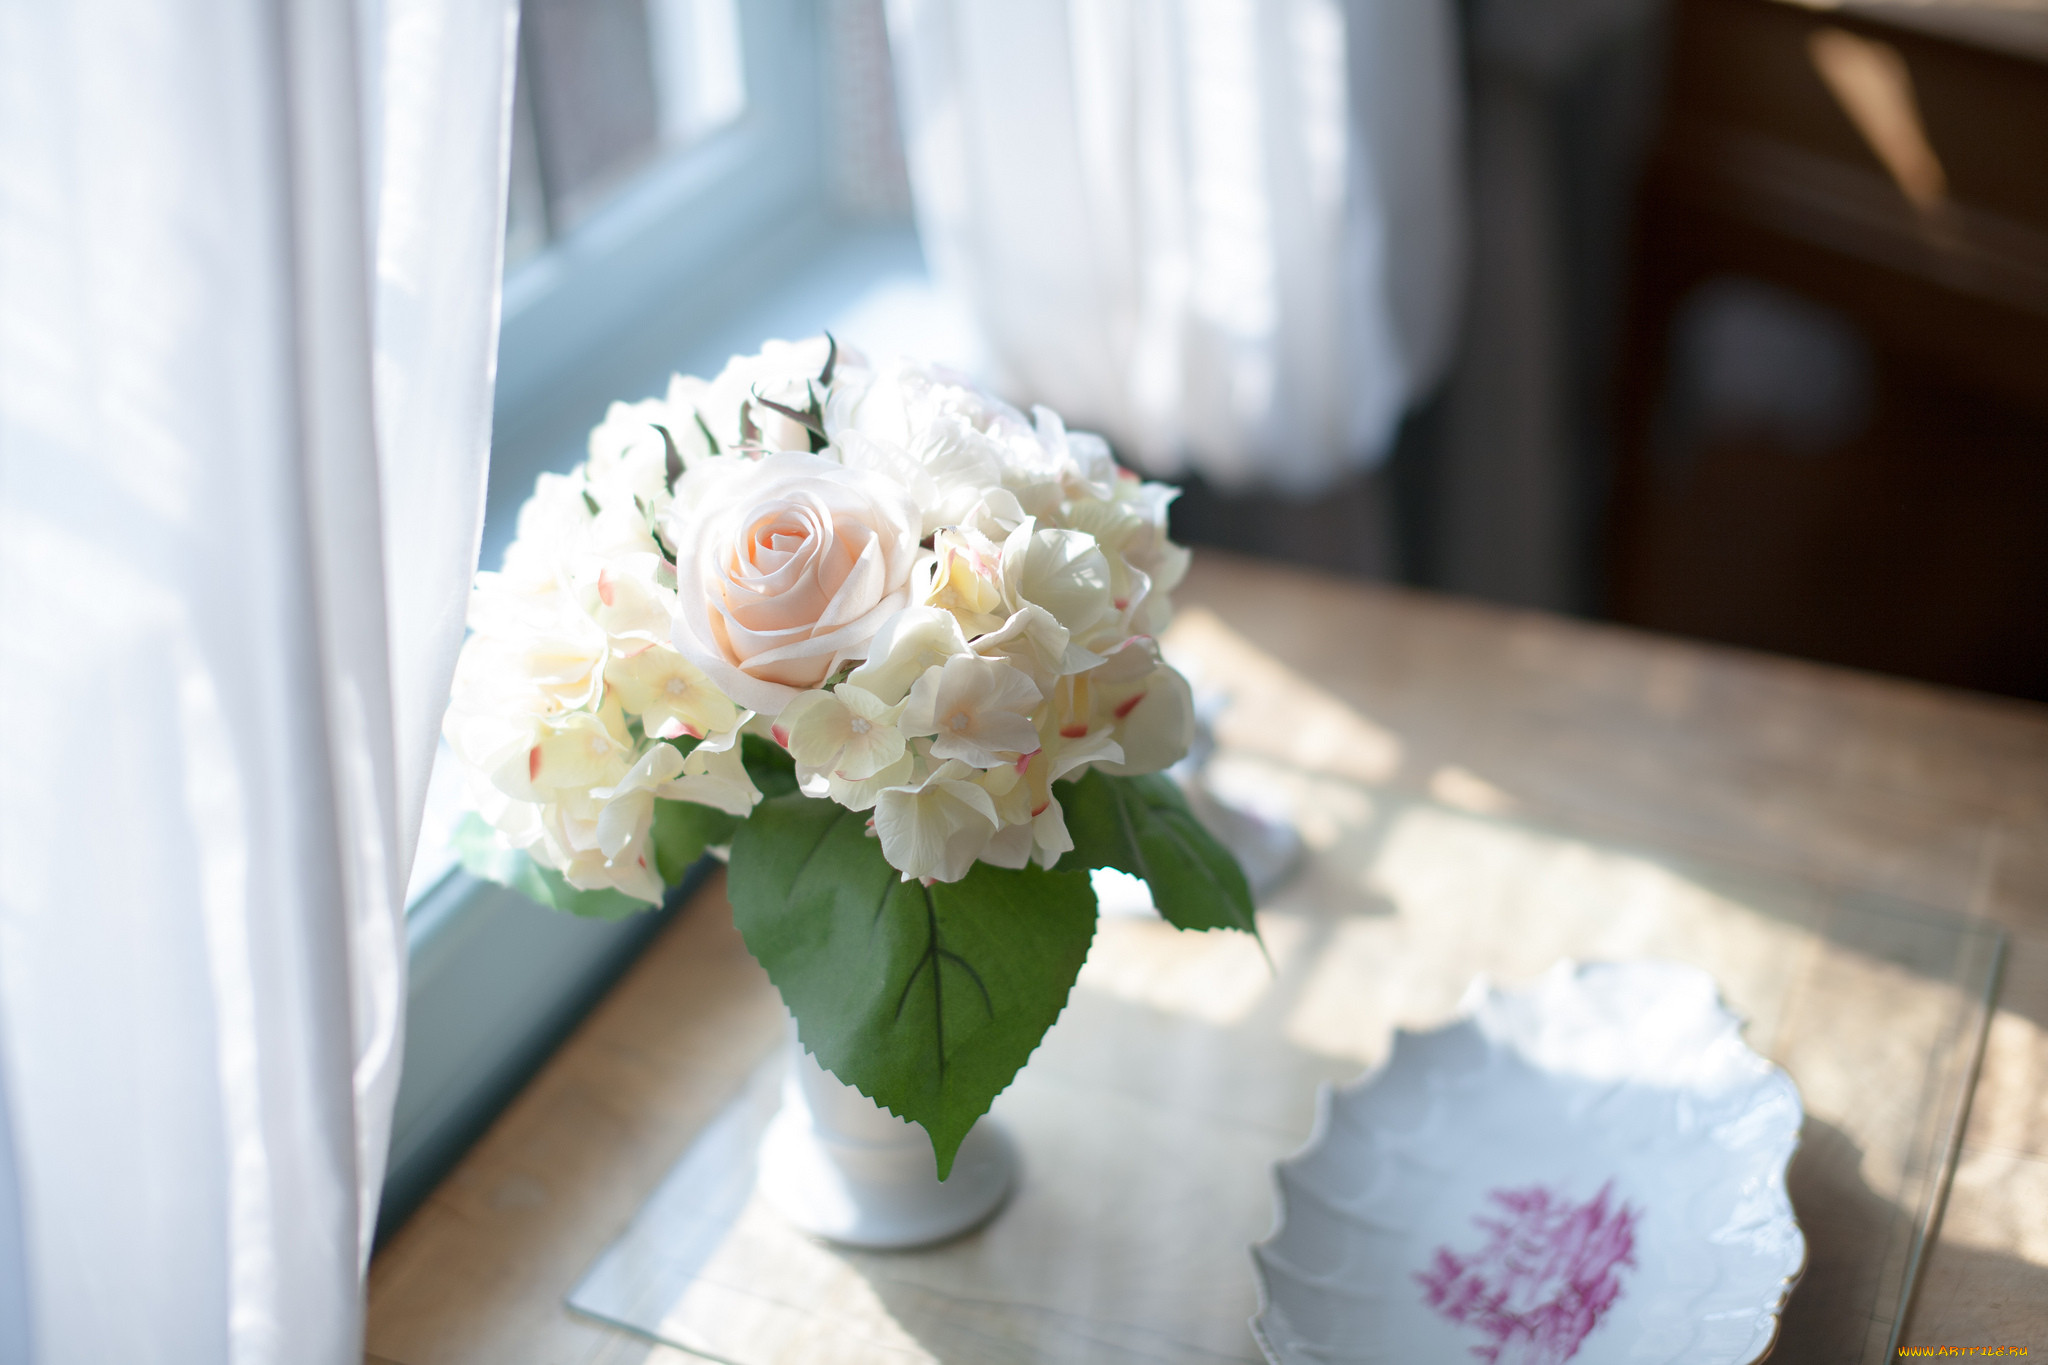 Букеты роз в вазе на столе. Букет роз на окне. Букет цветов на столе. Цветы в вазе на окне. Белые розы на окне.